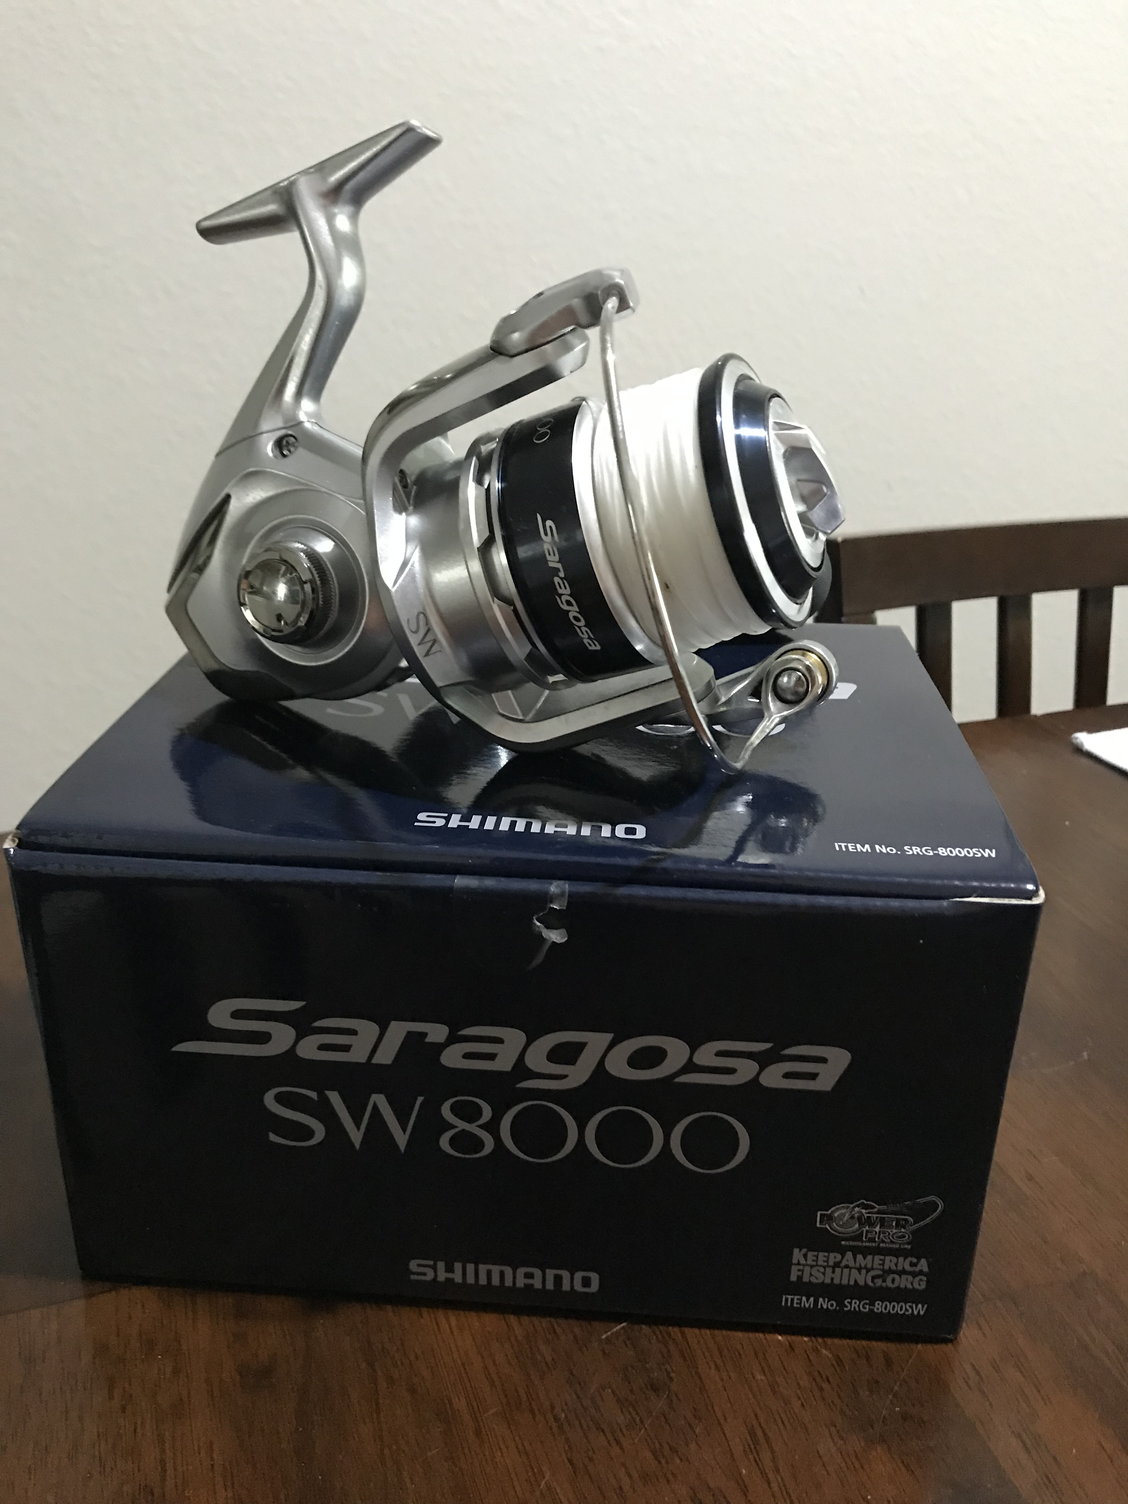 Shimano Saragosa 8000 - Sold - The Hull Truth - Boating and Fishing Forum